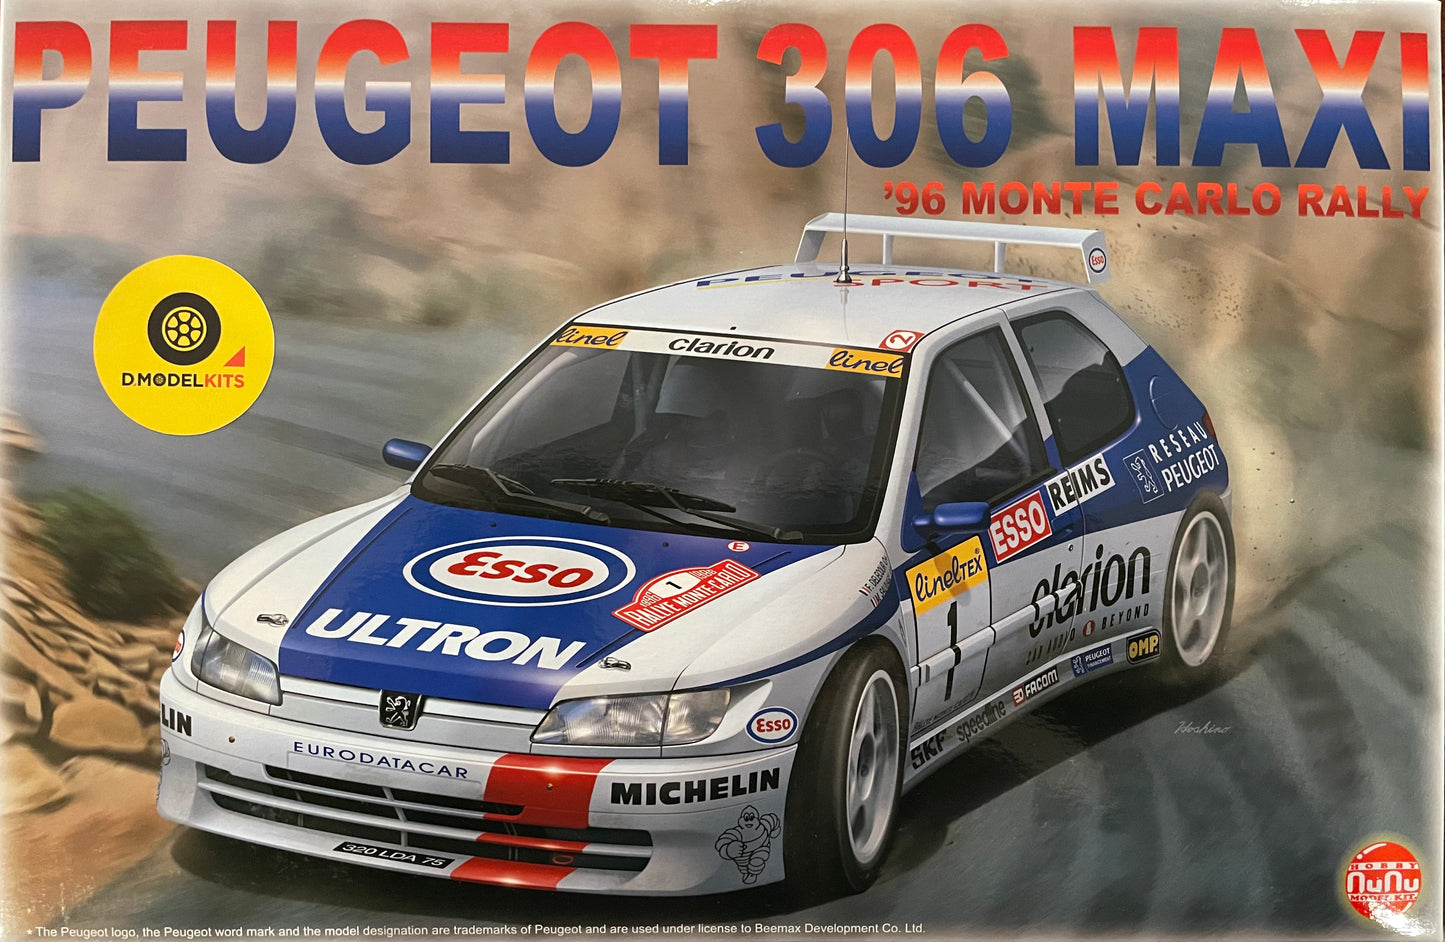 PEUGEOT 306 MAXI - RALLY MONTE CARLO 1996